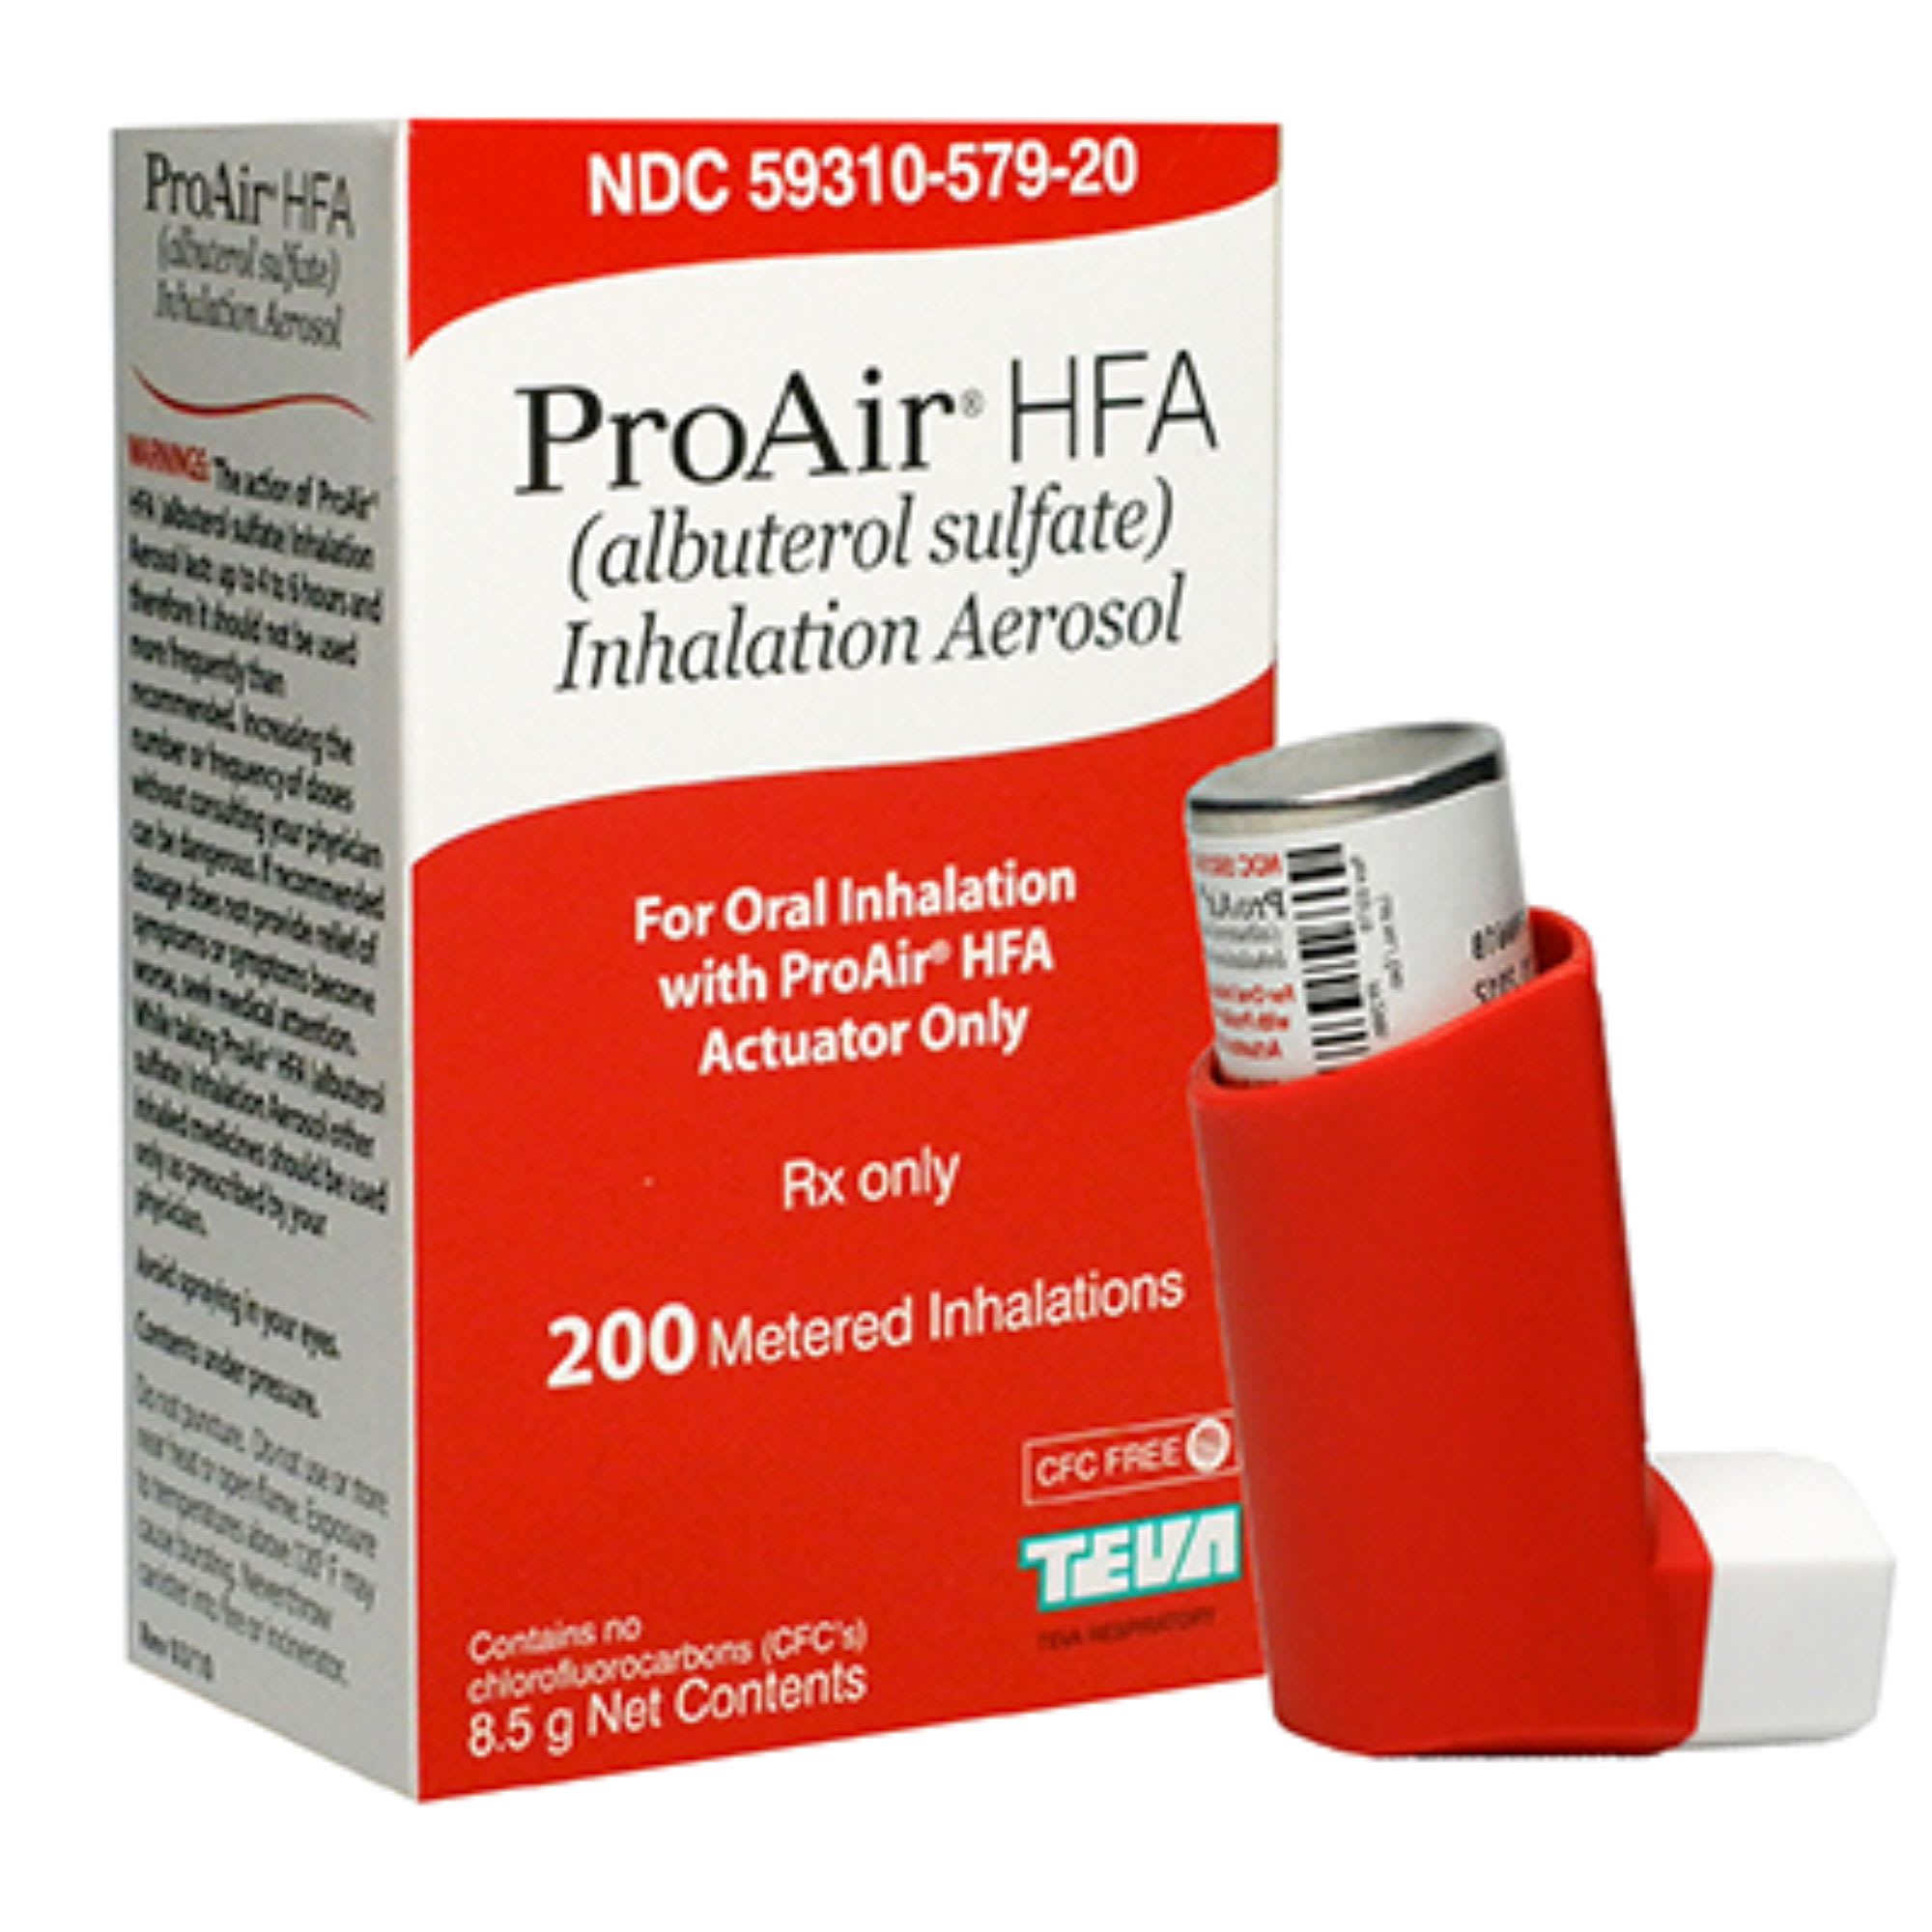 proair-hfa-inhalation-aerosol-90mcg-8-5gm-petco